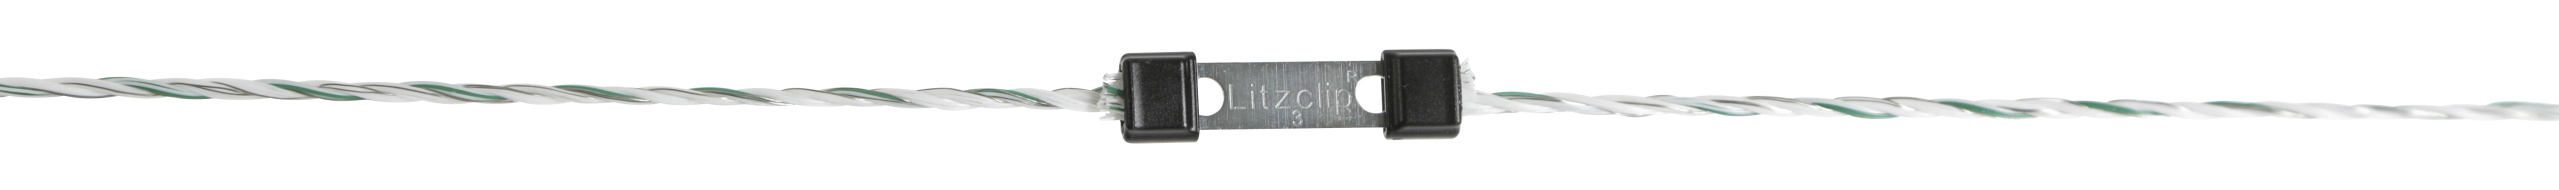 Litzenverbinder Litzclip Edelstahl 3mm gerade 10 Stück